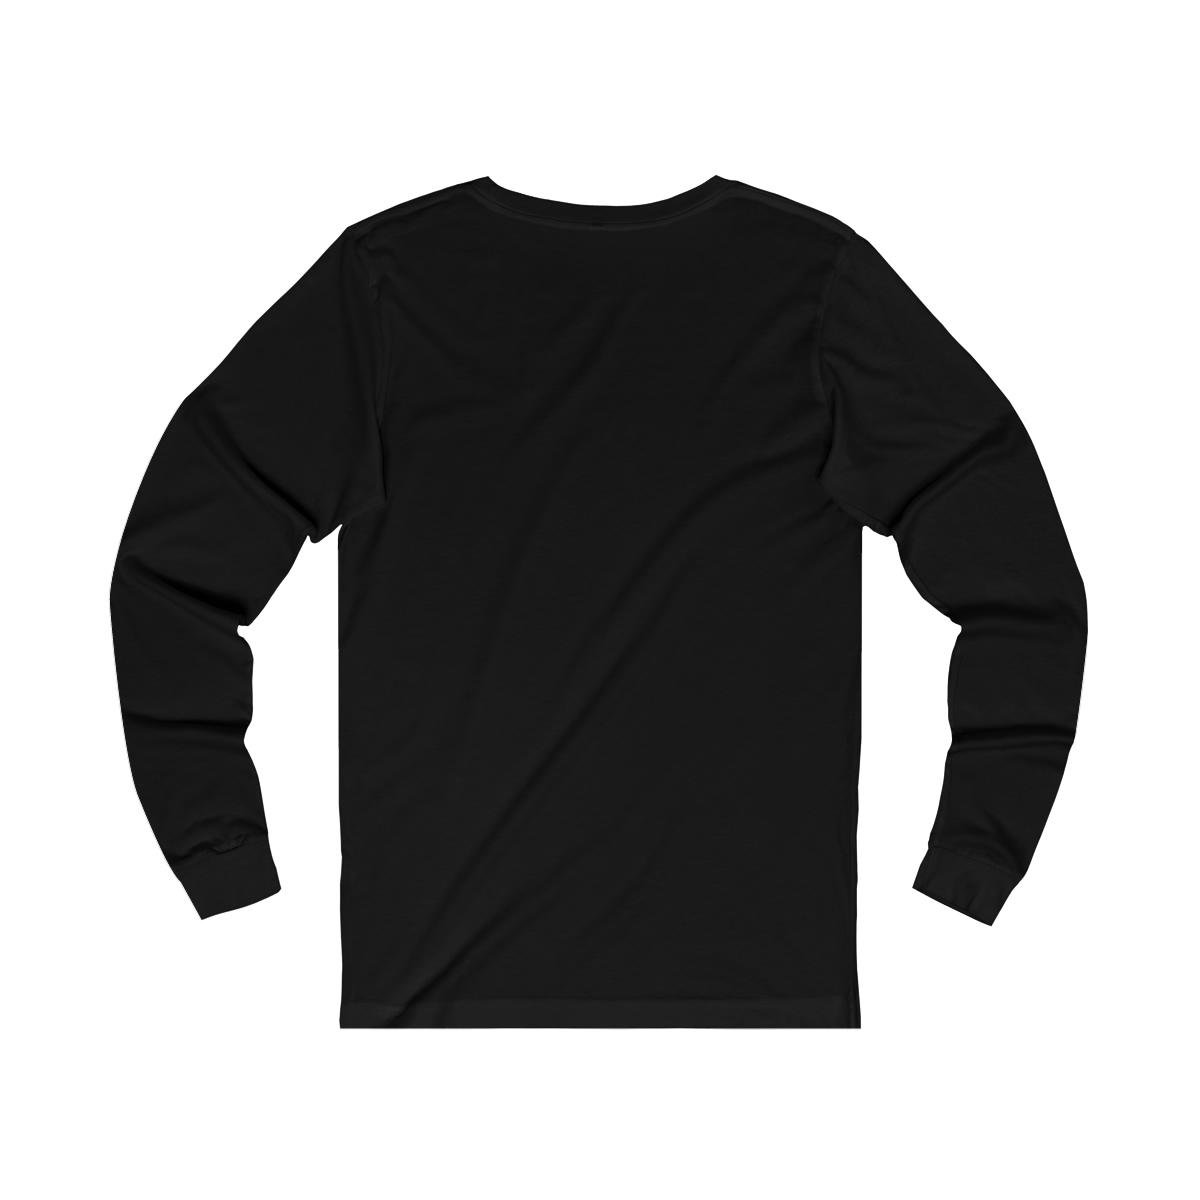 Crux – Failure To Yield Long Sleeve Tshirt